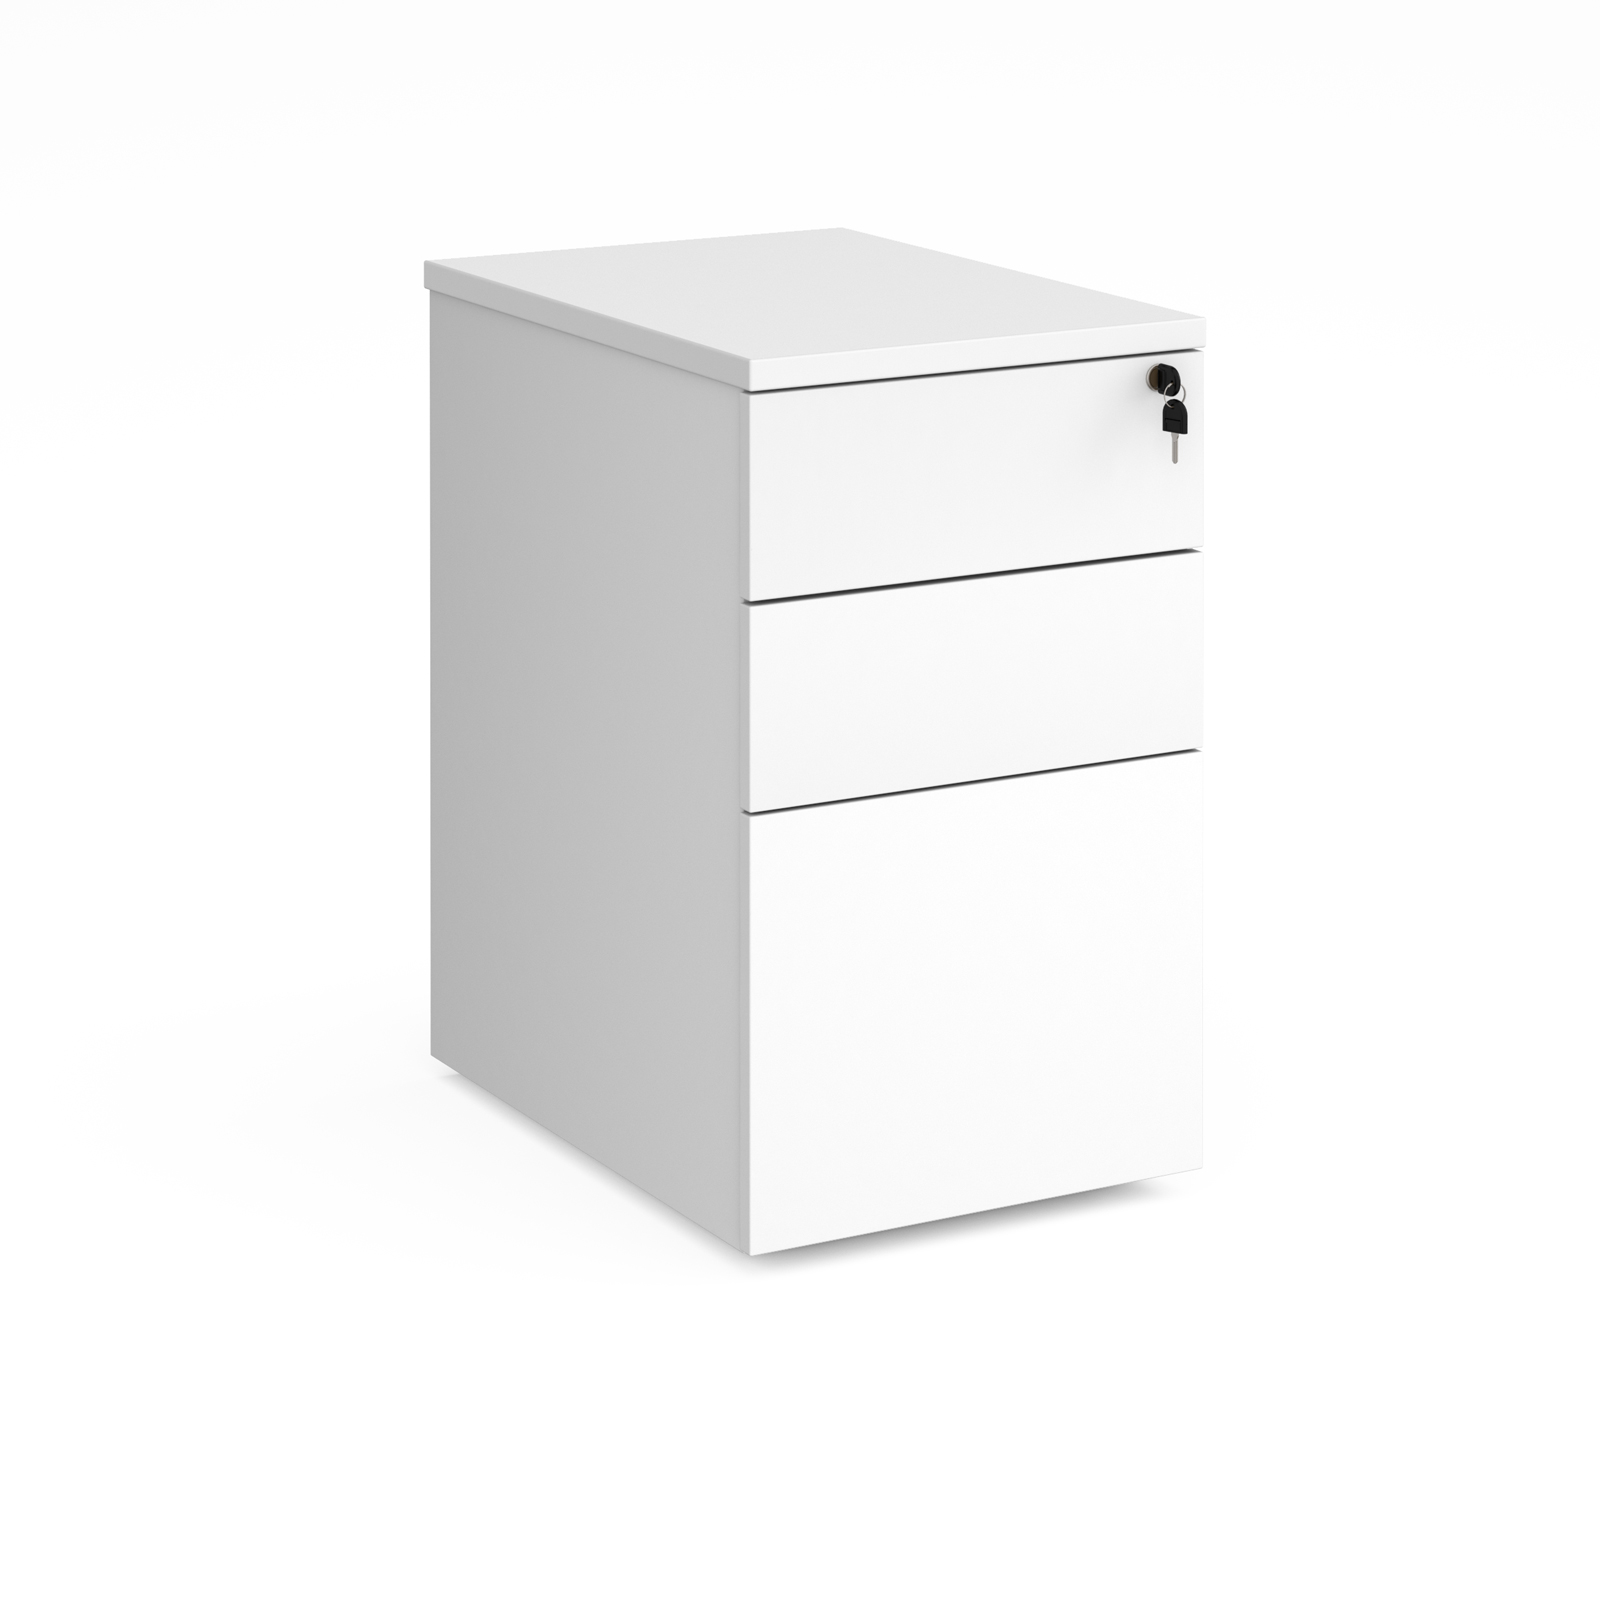 Deluxe desk high 3 drawer pedestal 600mm deep - white